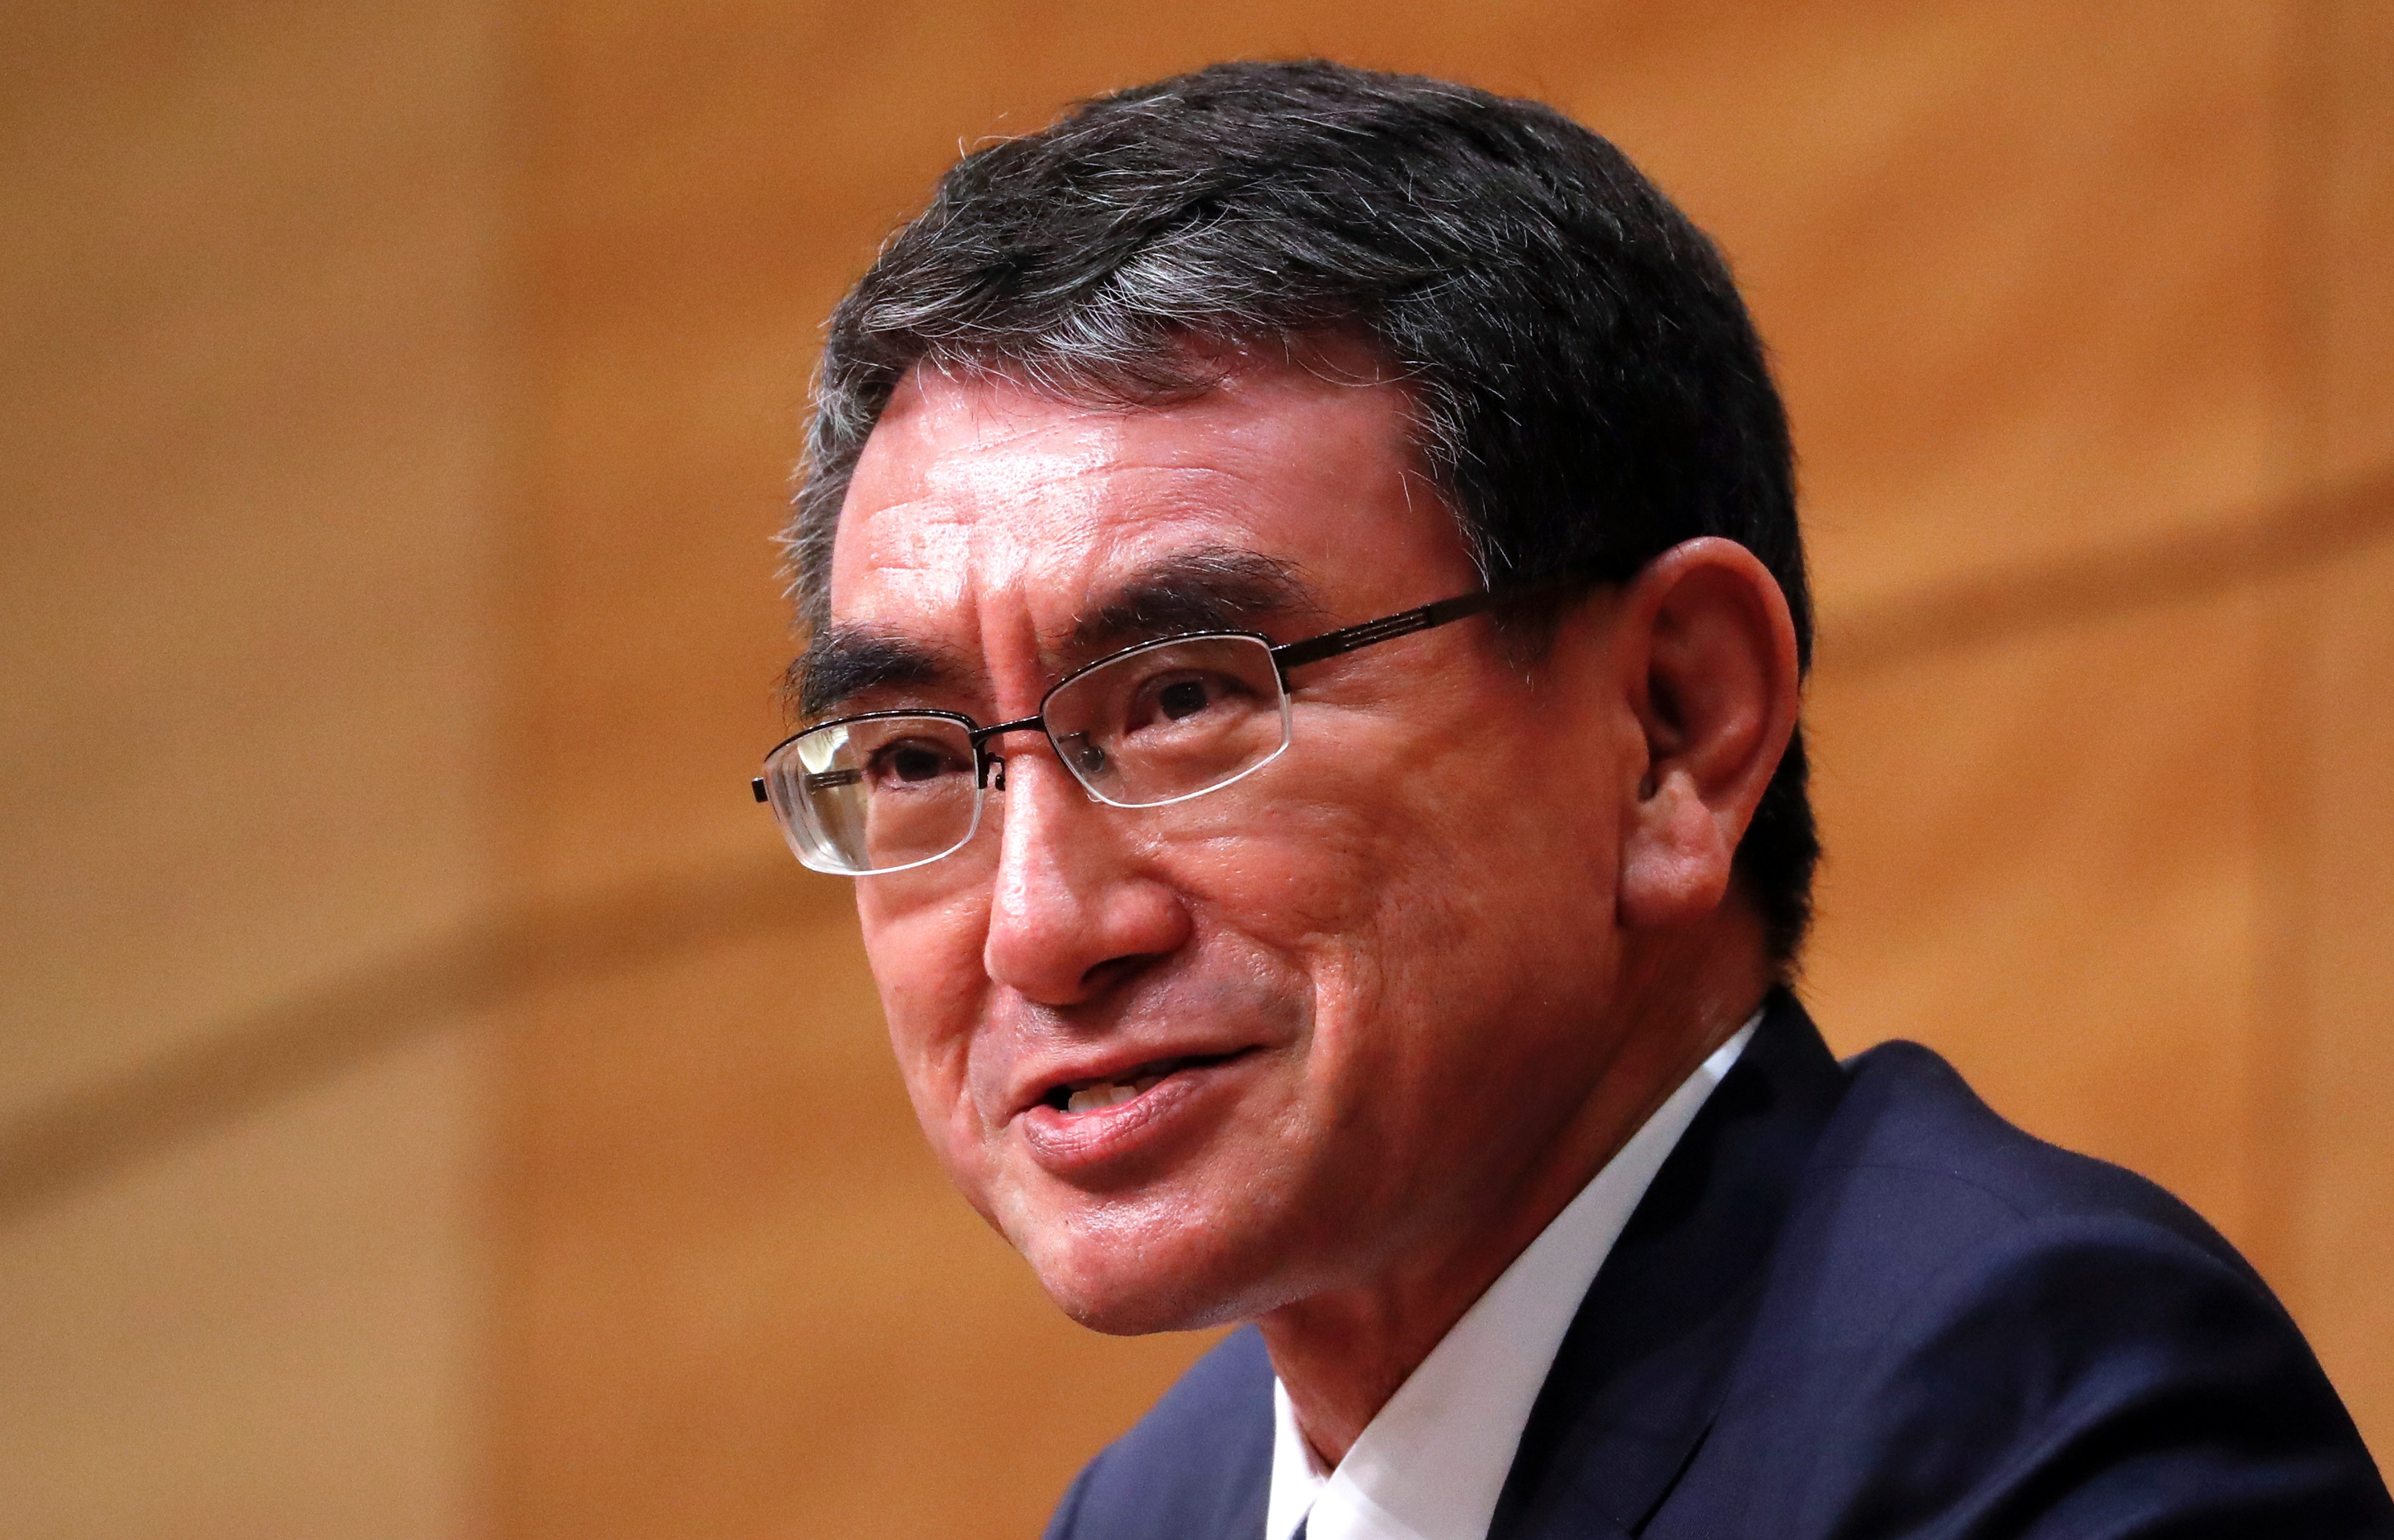 Japan’s popular vaccine minister Kono enters race for next leader